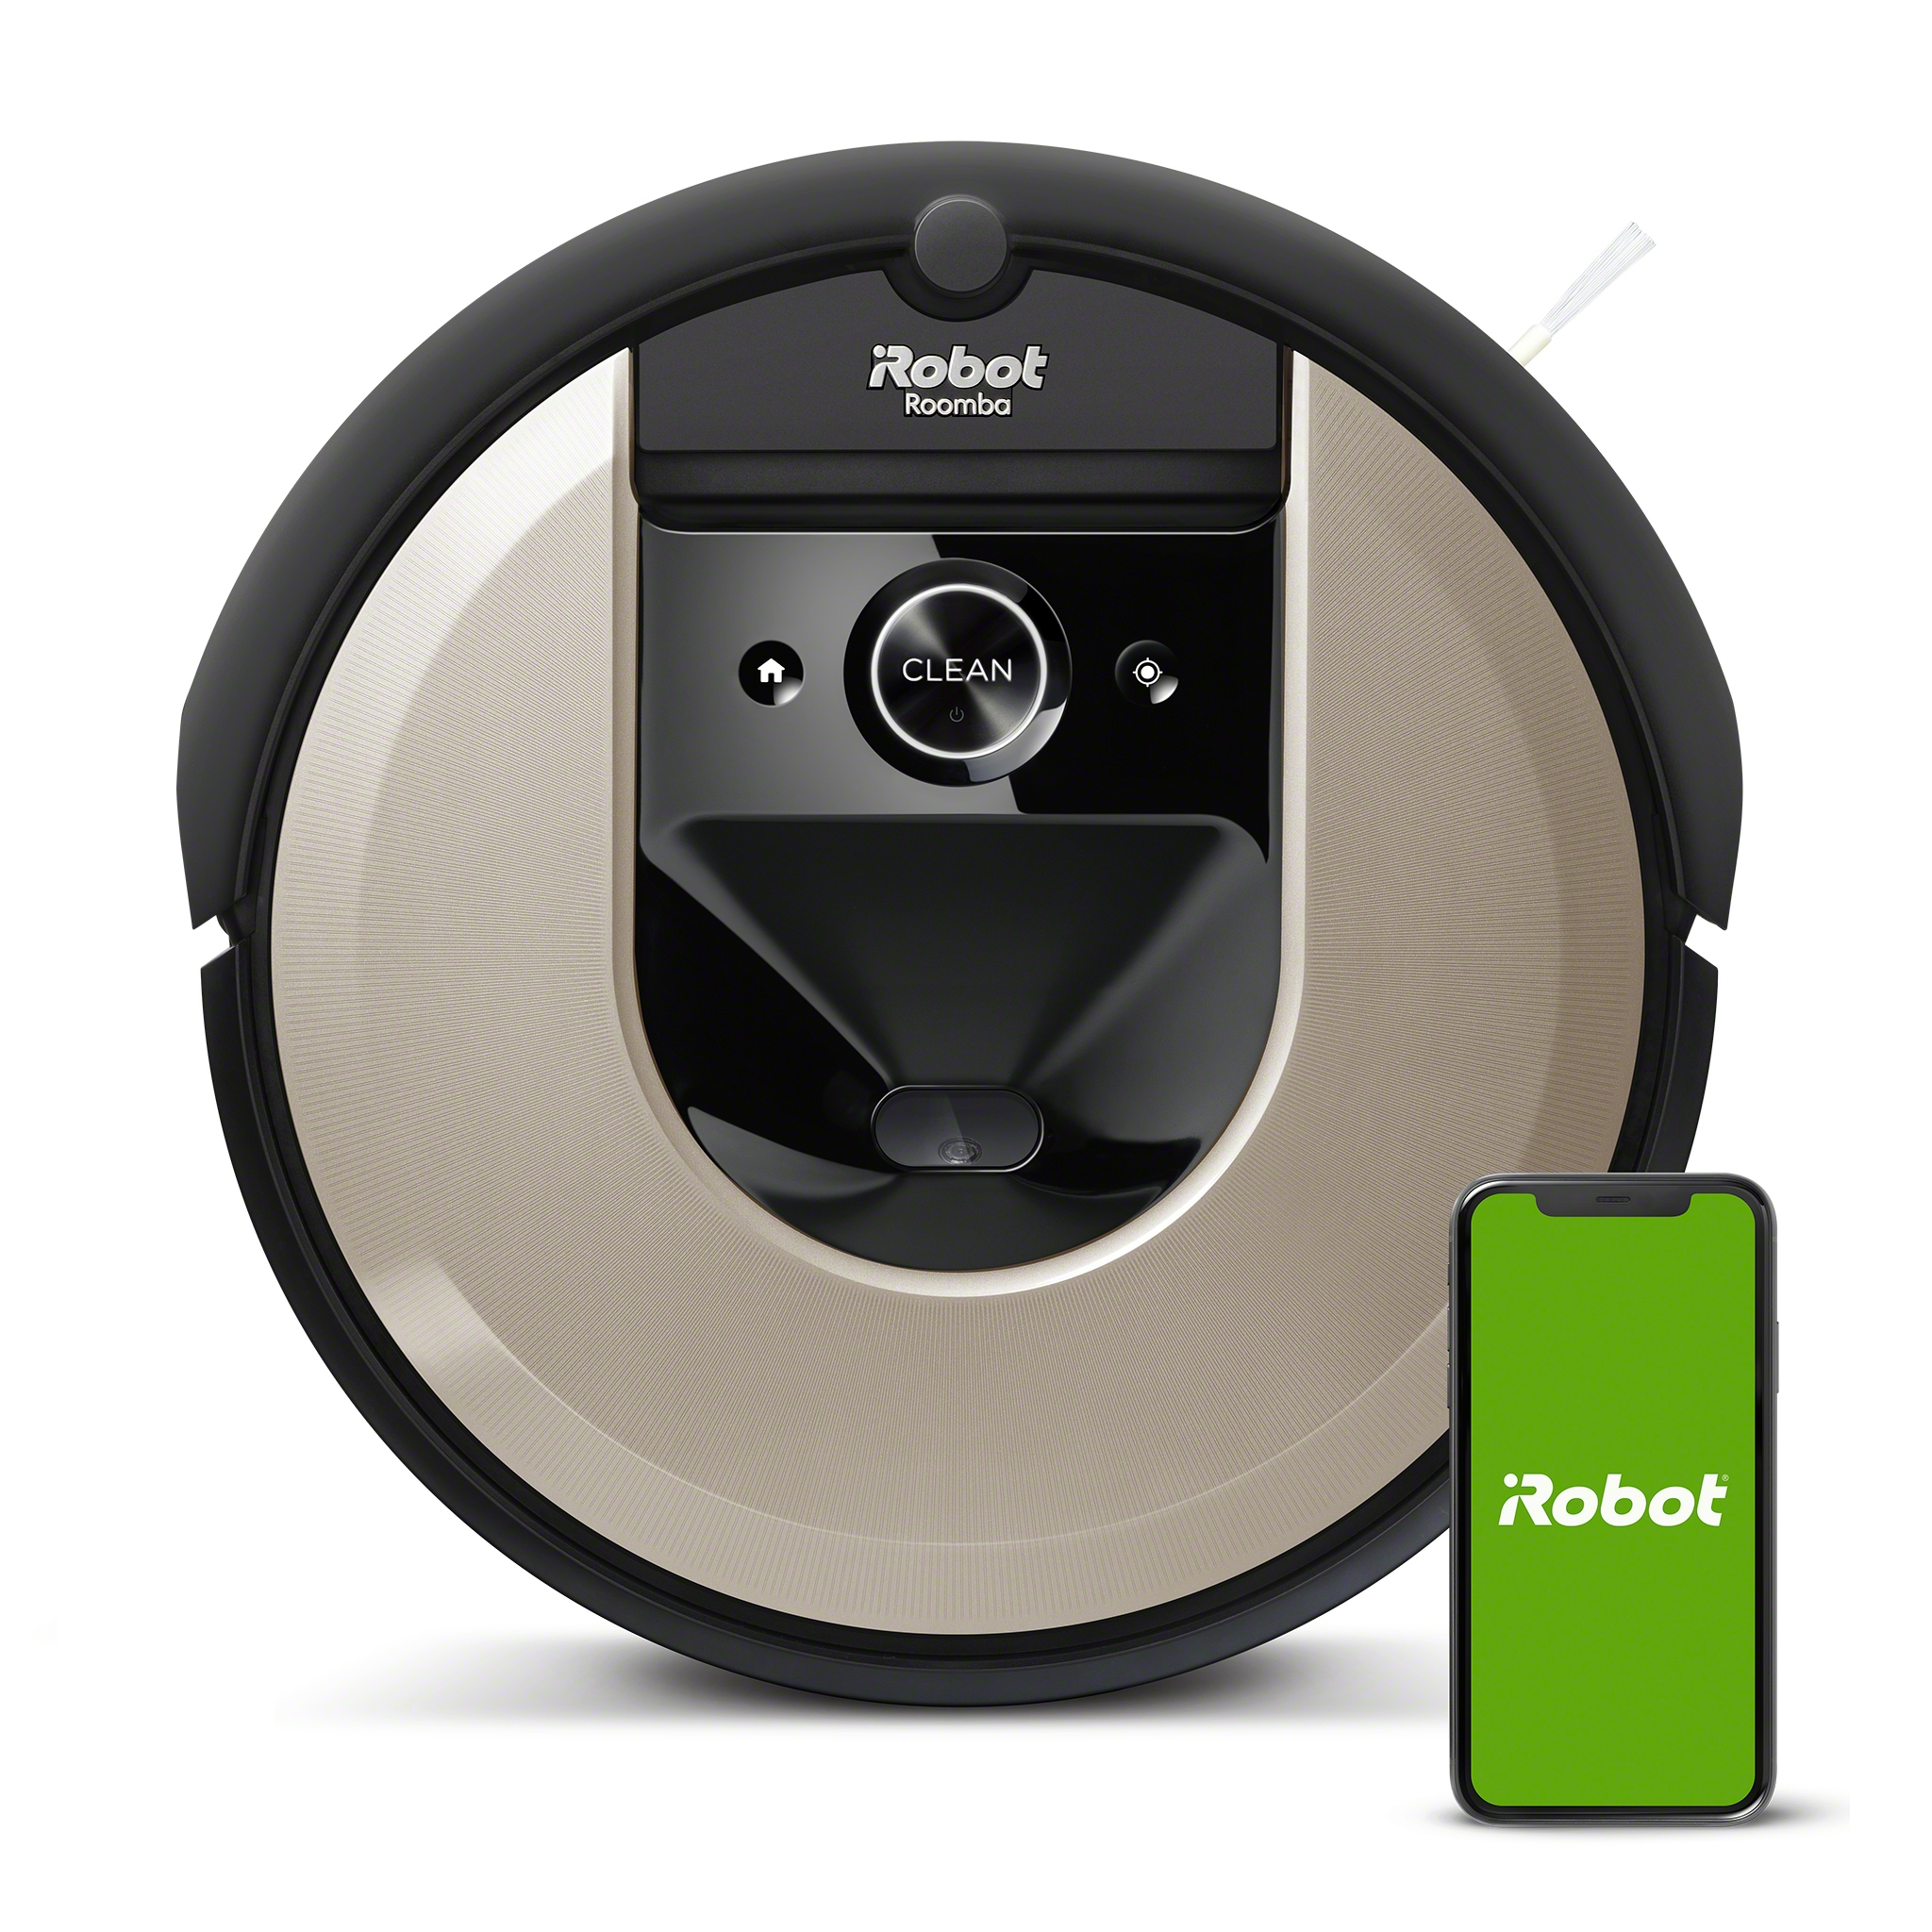 ha rebajado 160€ este robot aspirador de Roomba con WiFi